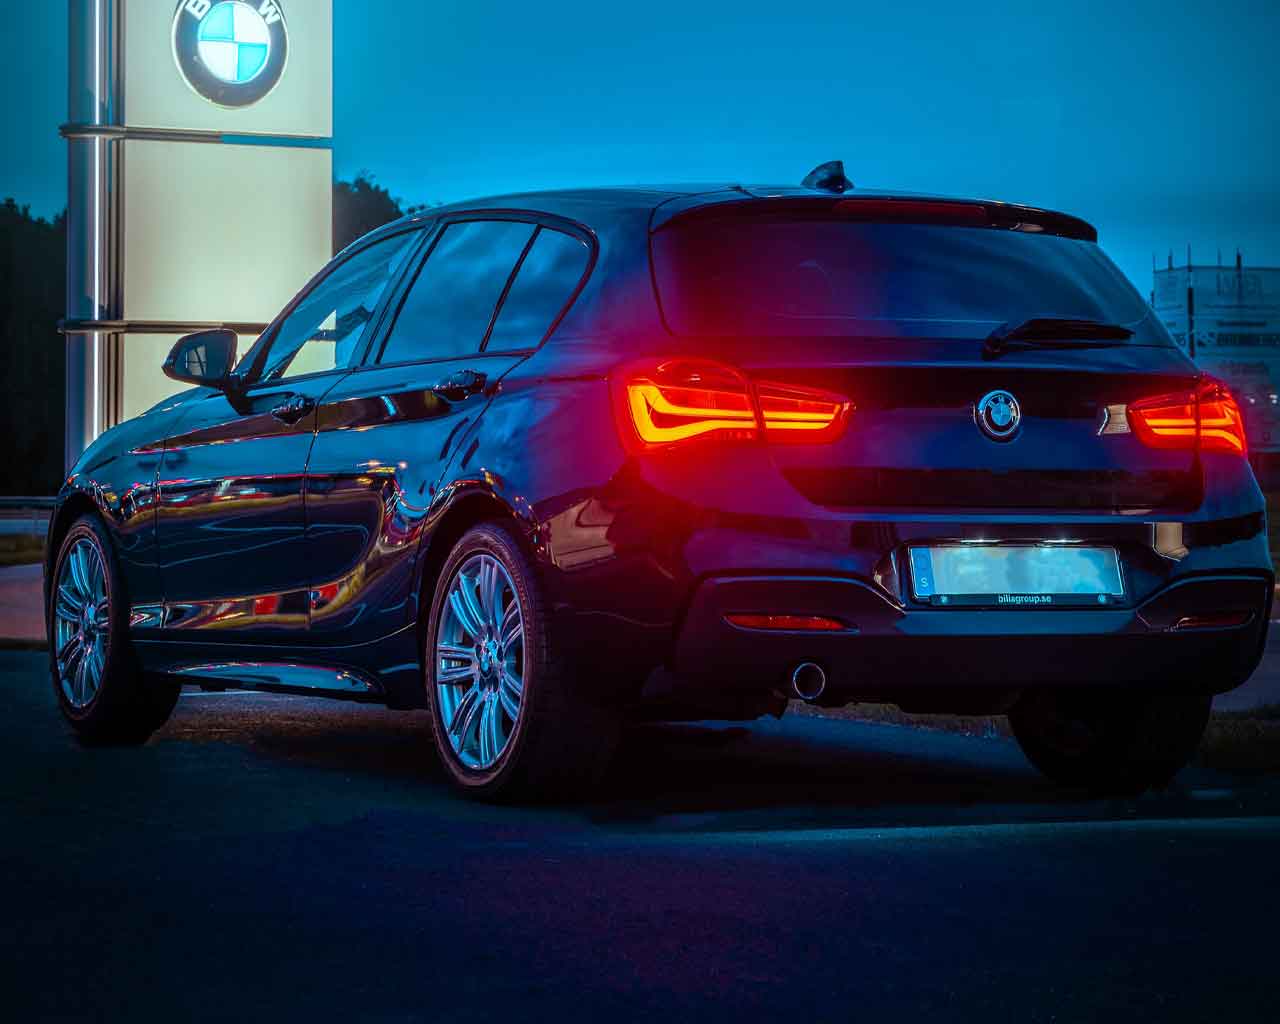 BMW 1er: E87, F20, F40 – das Kompaktklasse-Fahrzeug der Münchner